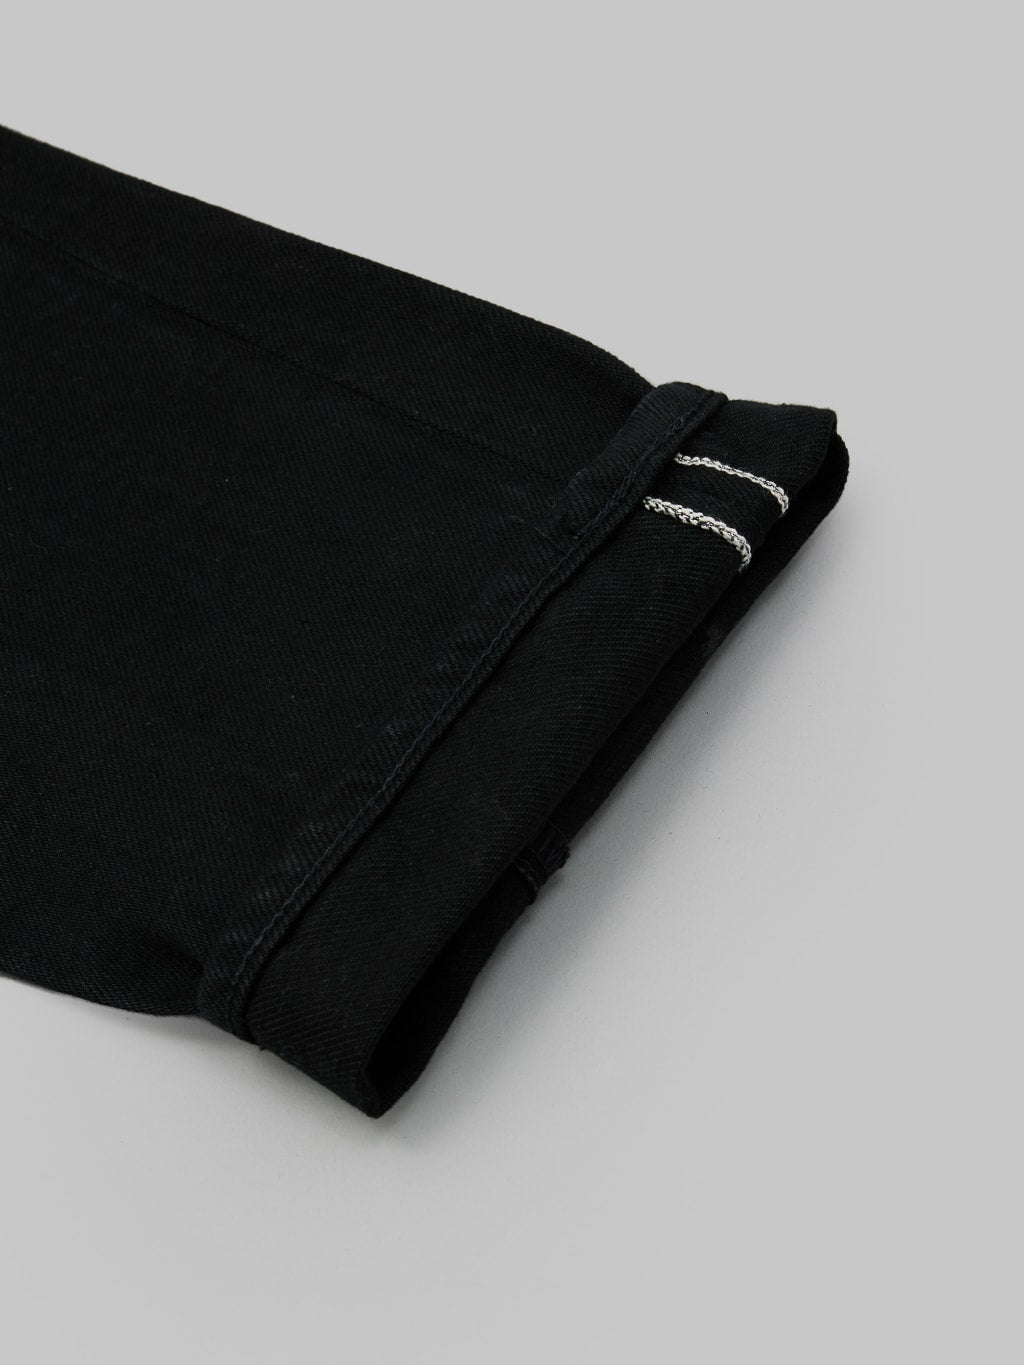 Samurai Jeans Color Fast Black x Black slim straight Jeans selvedge